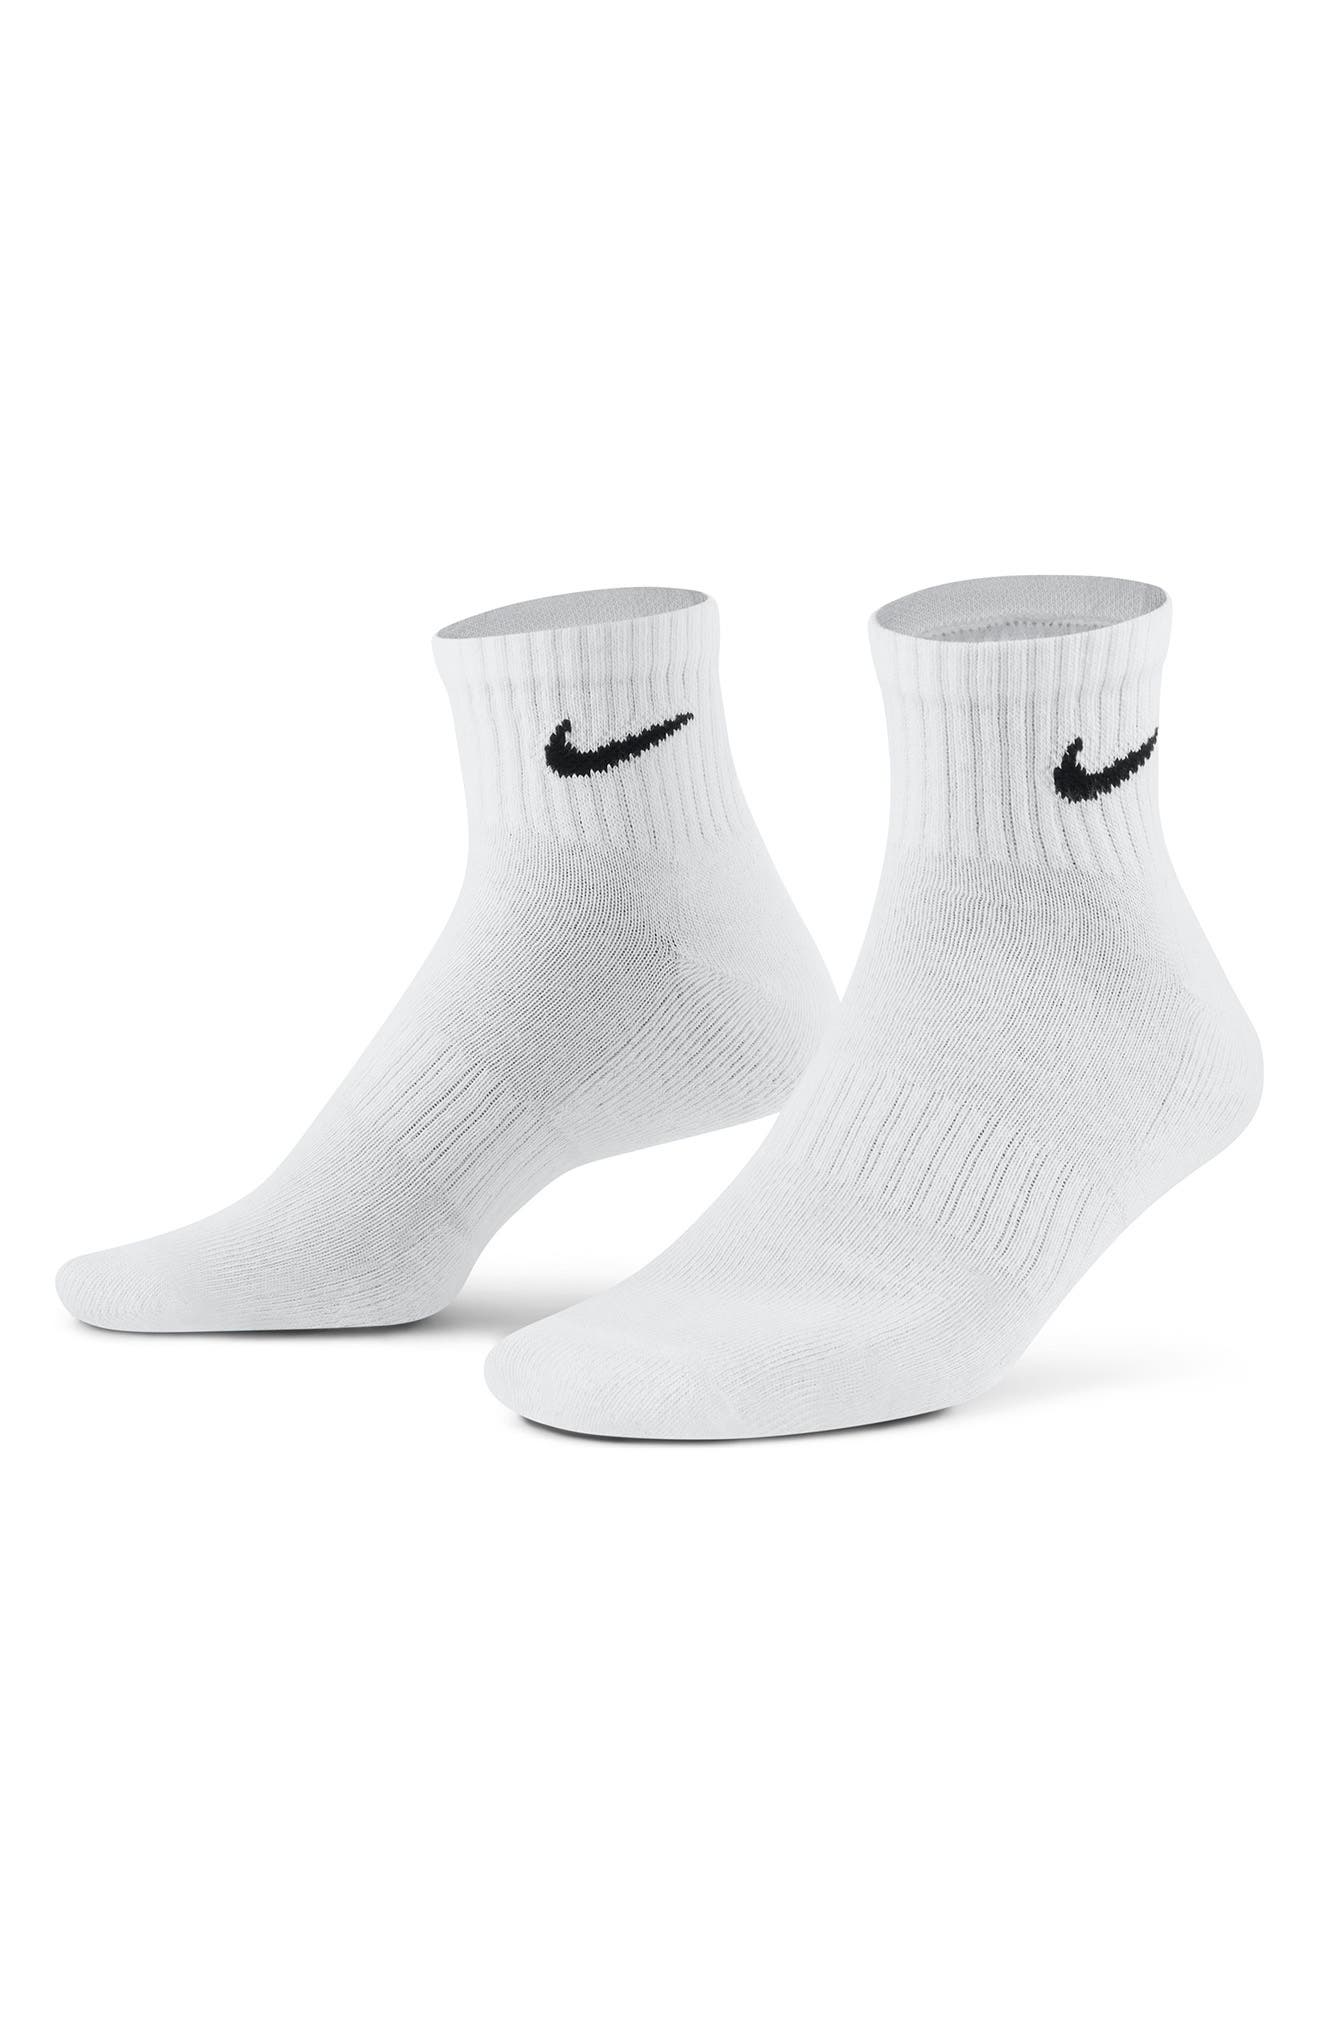 Nike | Everyday Cushion Training Ankle Socks - Pack of 3 | Nordstrom Rack